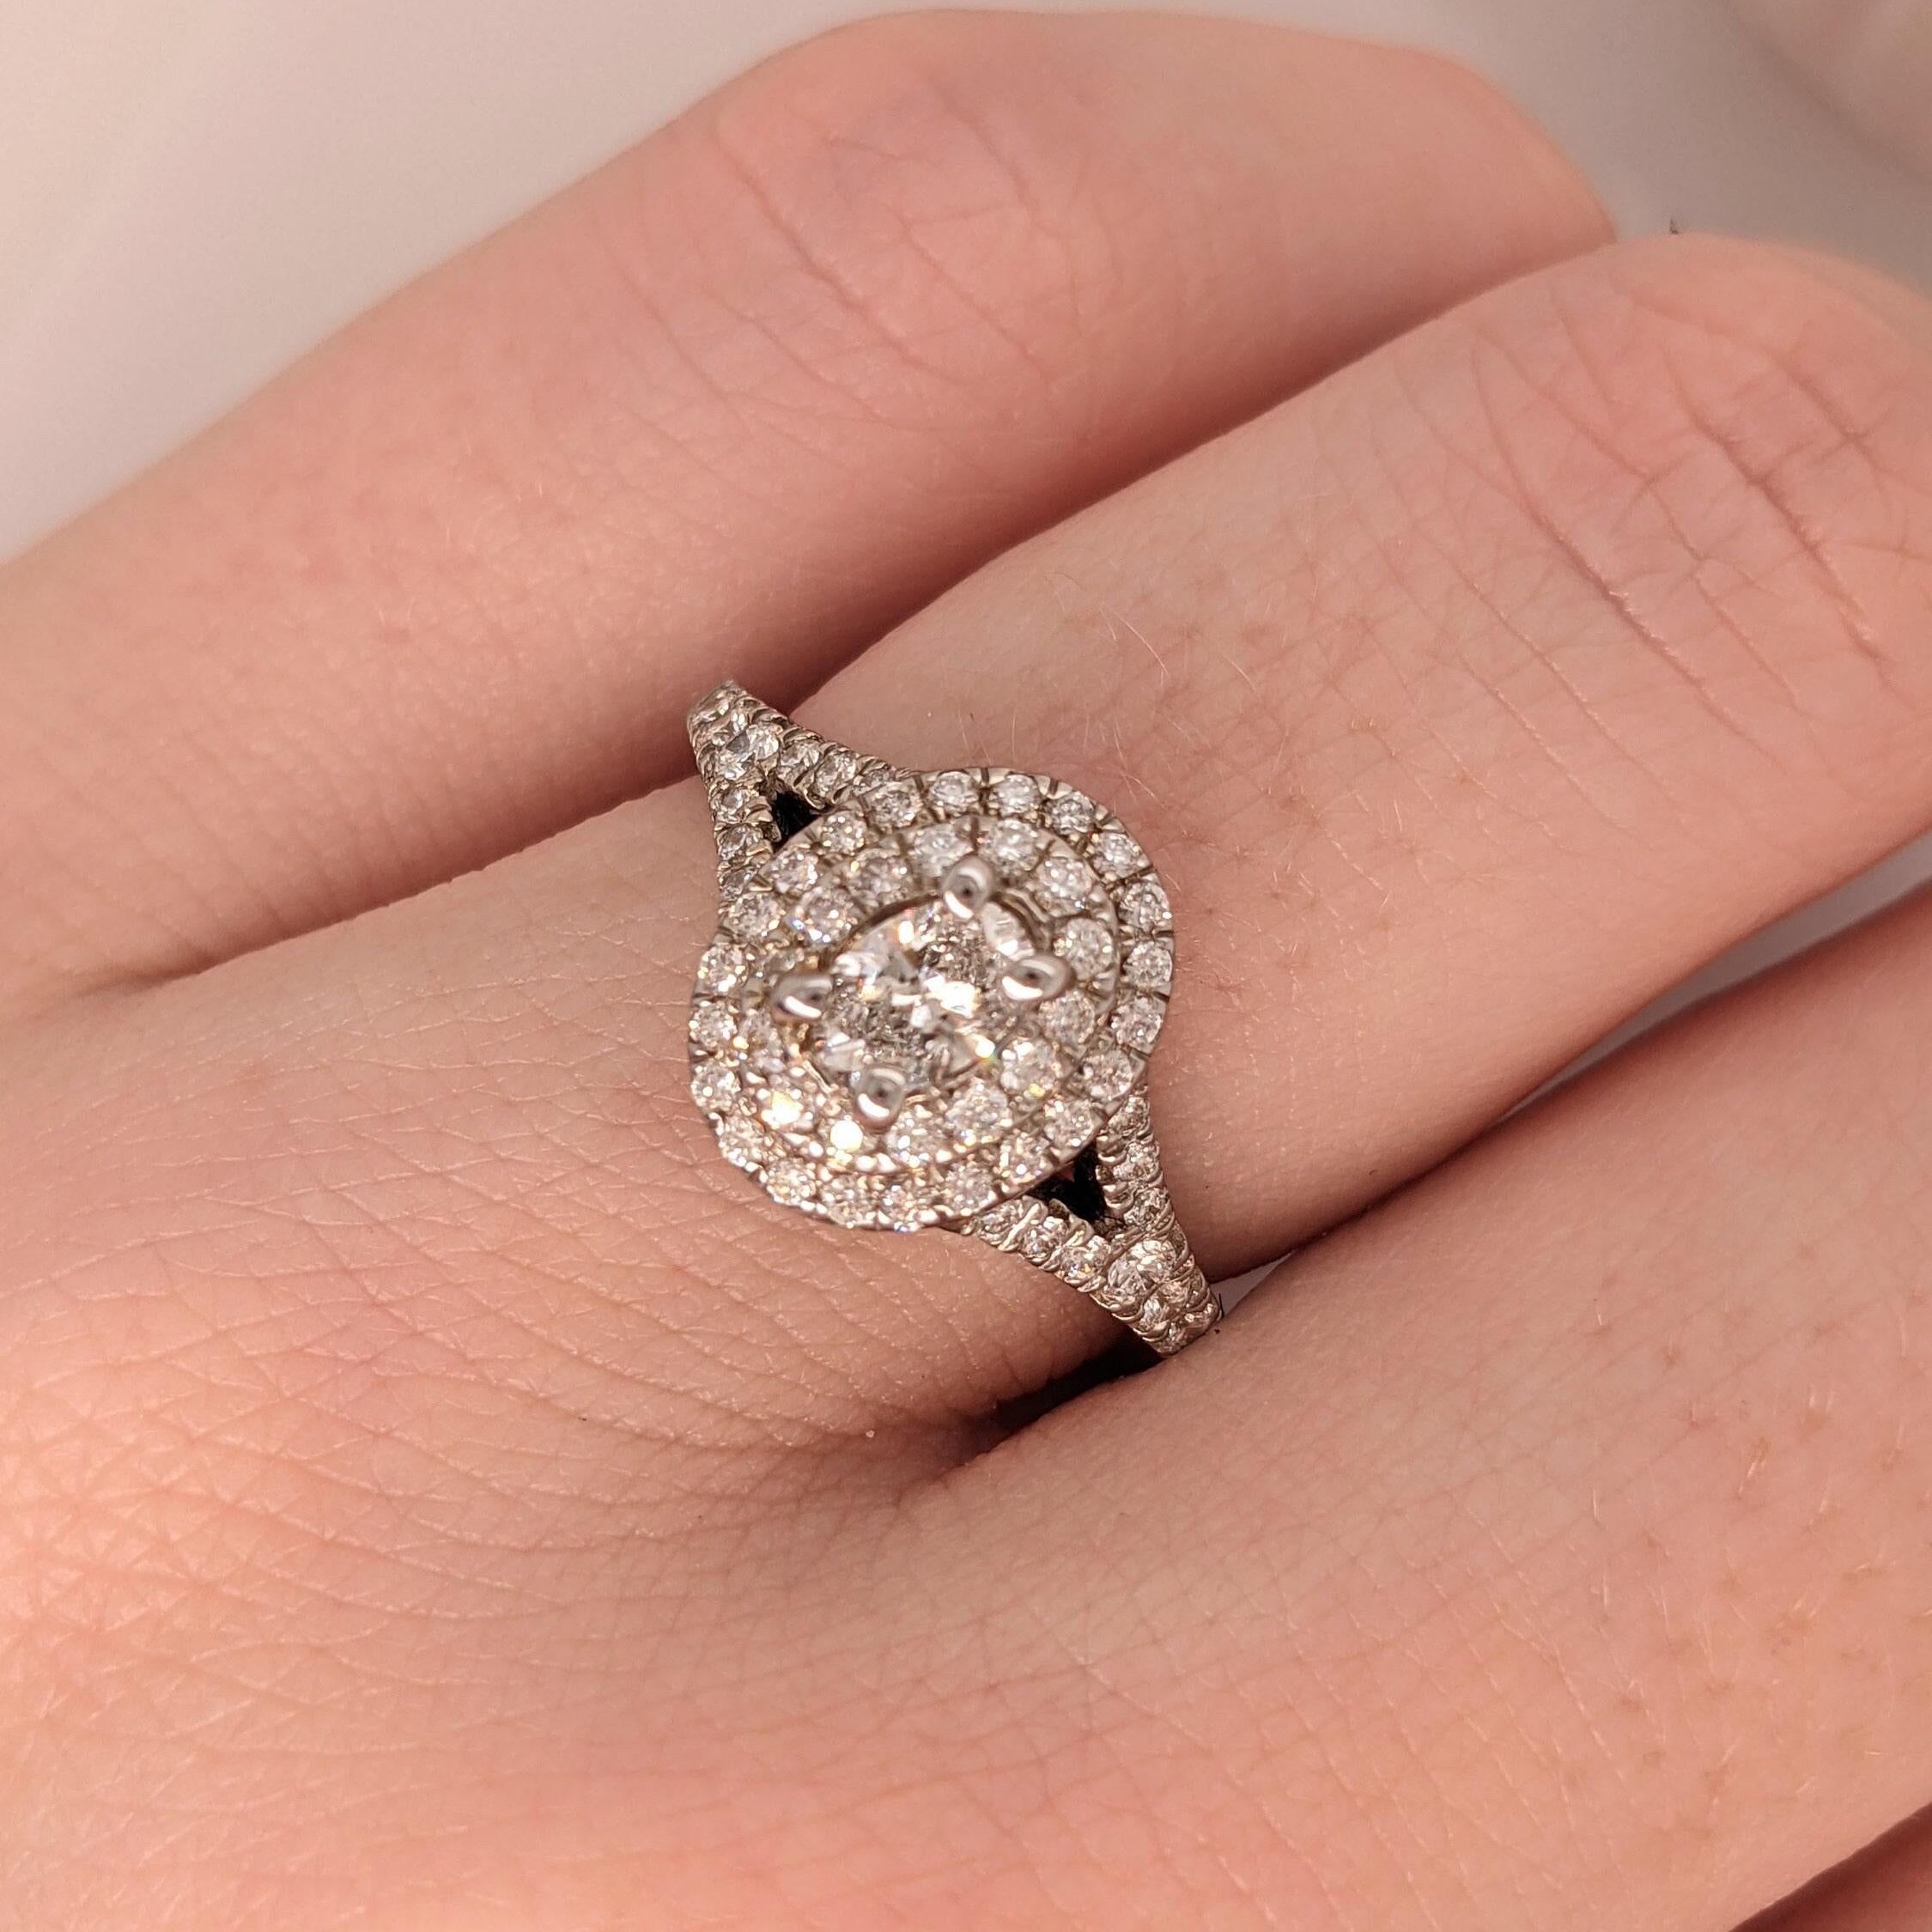 Beautiful Diamond Ring in 14K White Gold | Earth Mined Diamonds | Double Halo